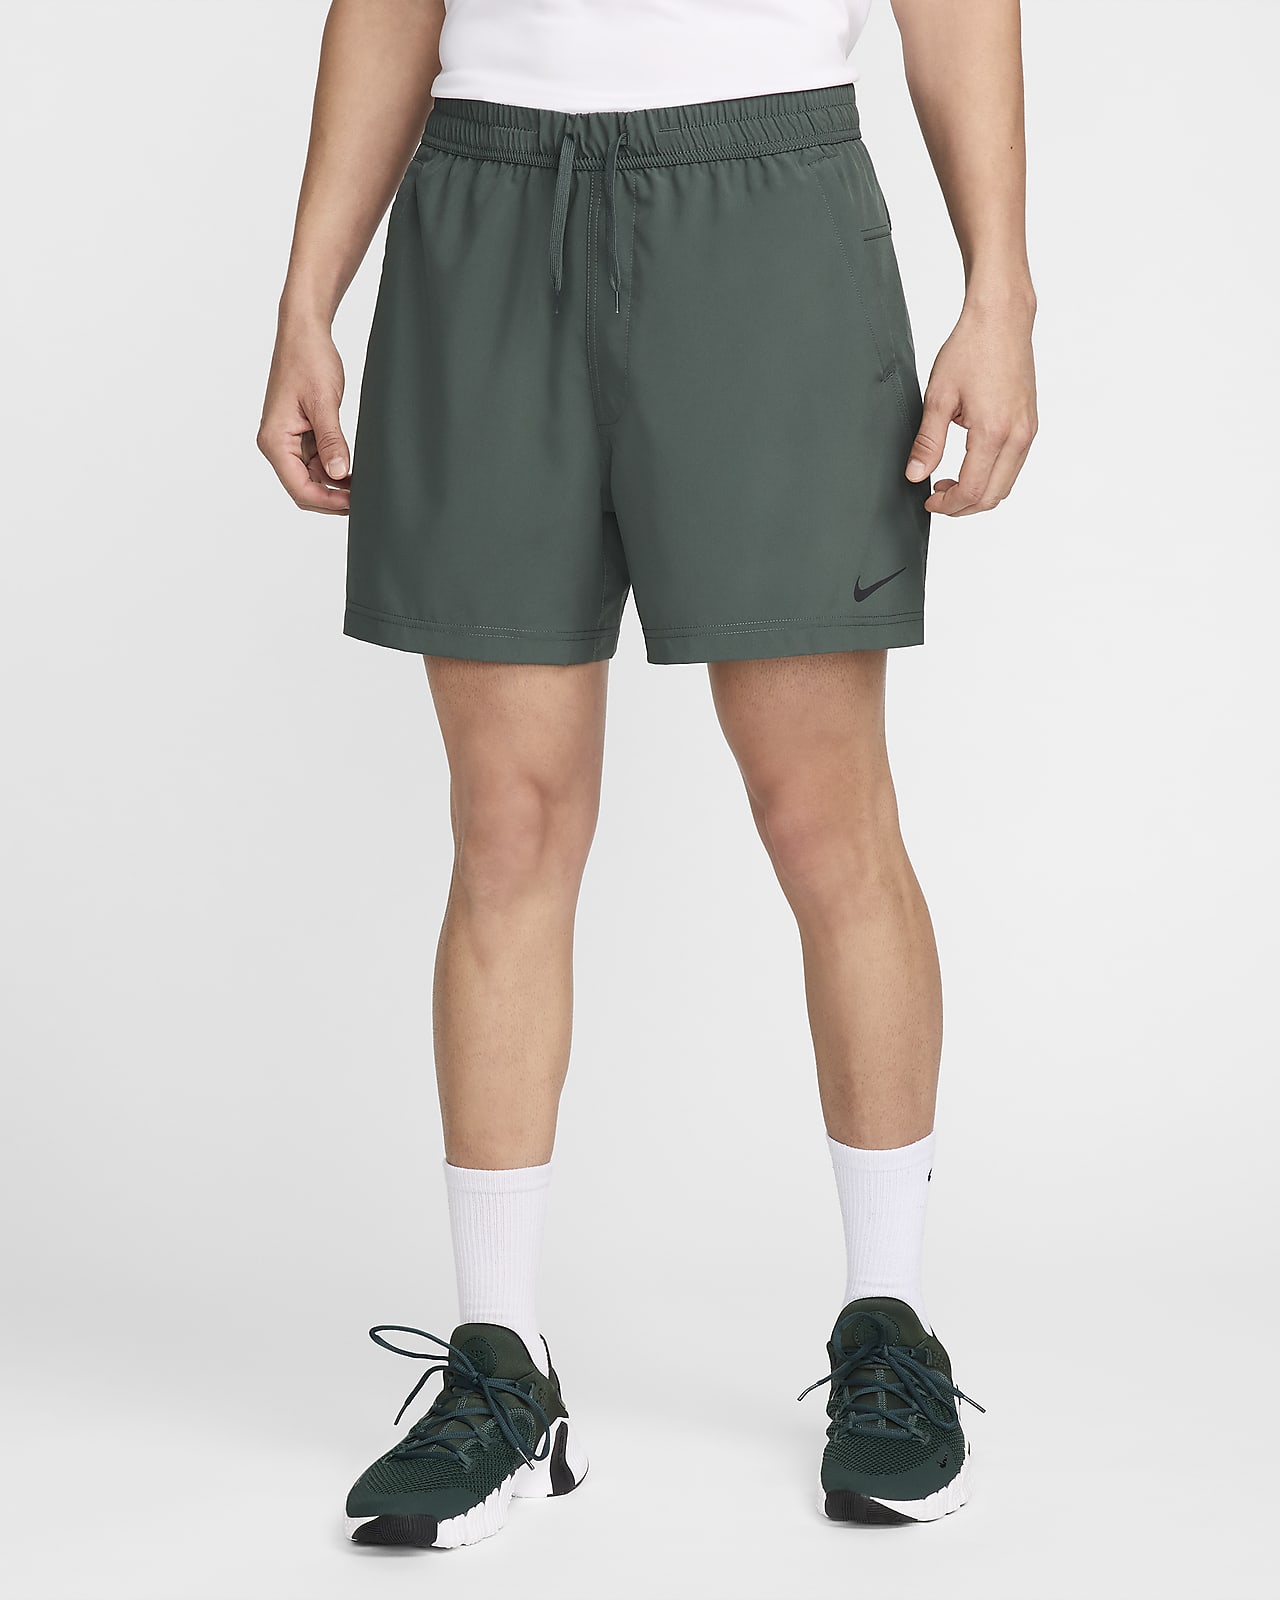 Men's fleece shorts – Get up. Get out. Get active.